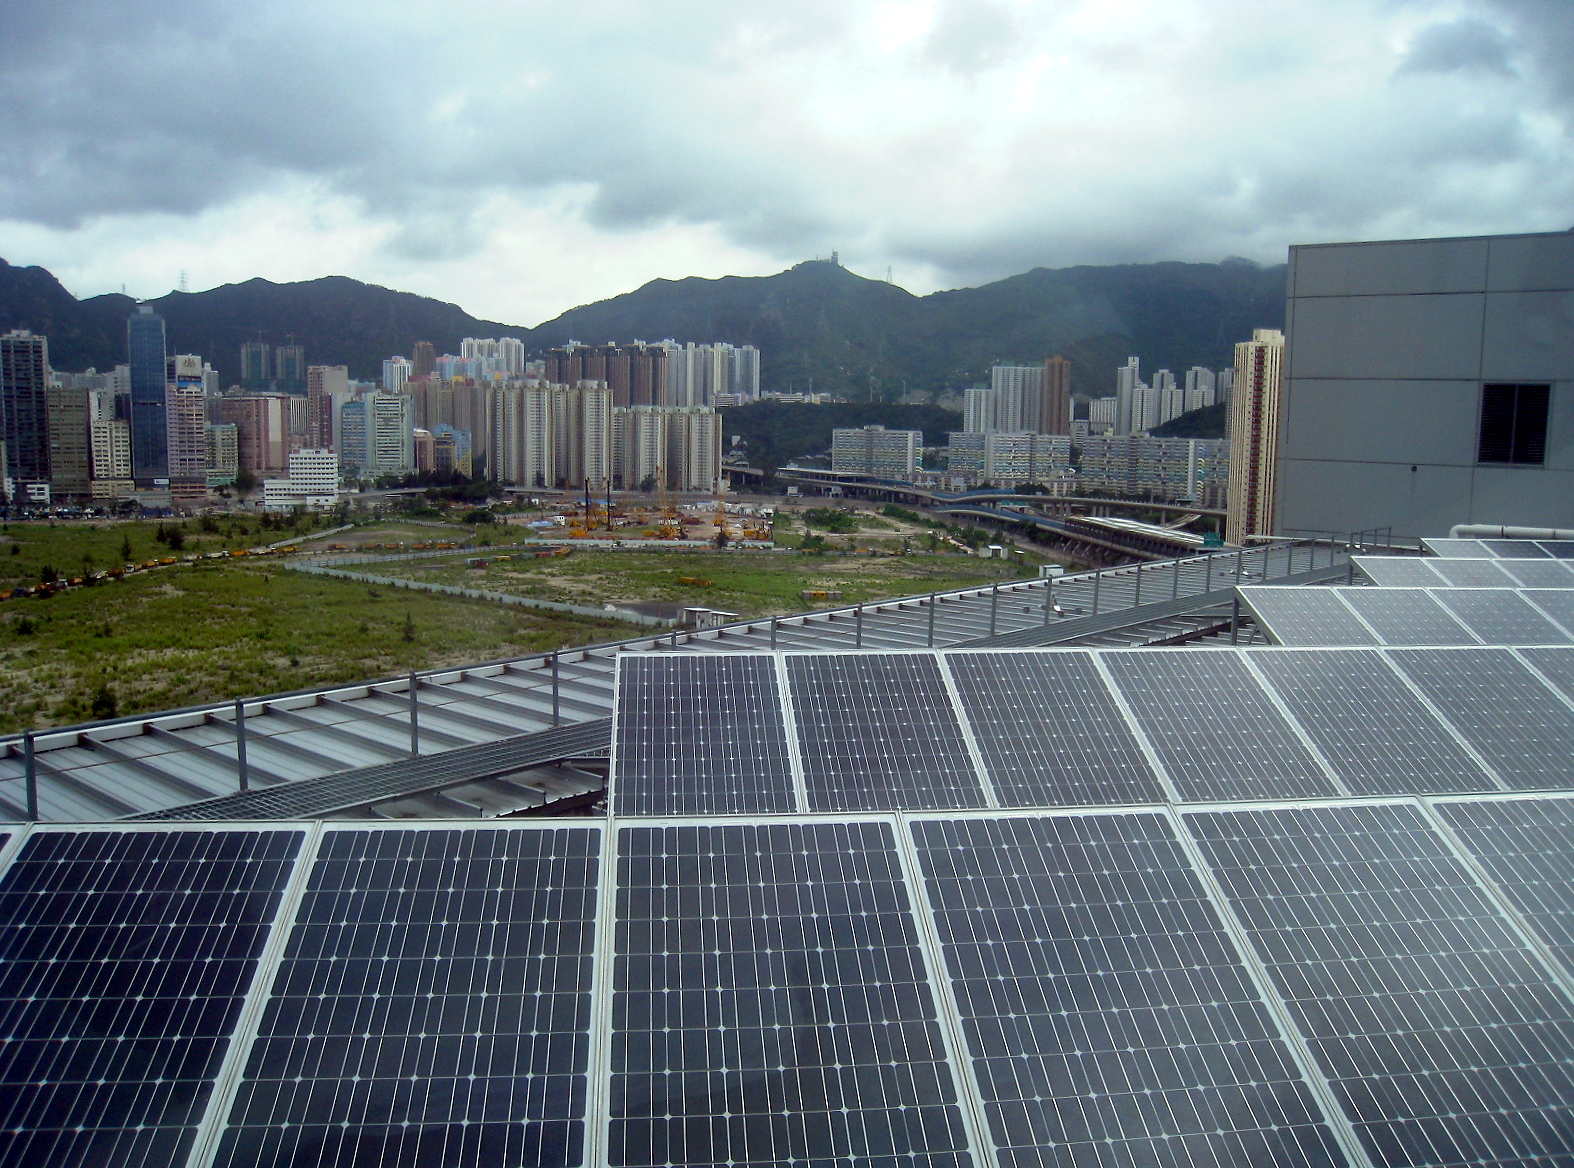 Panel solar - Wikipedia, la enciclopedia libre